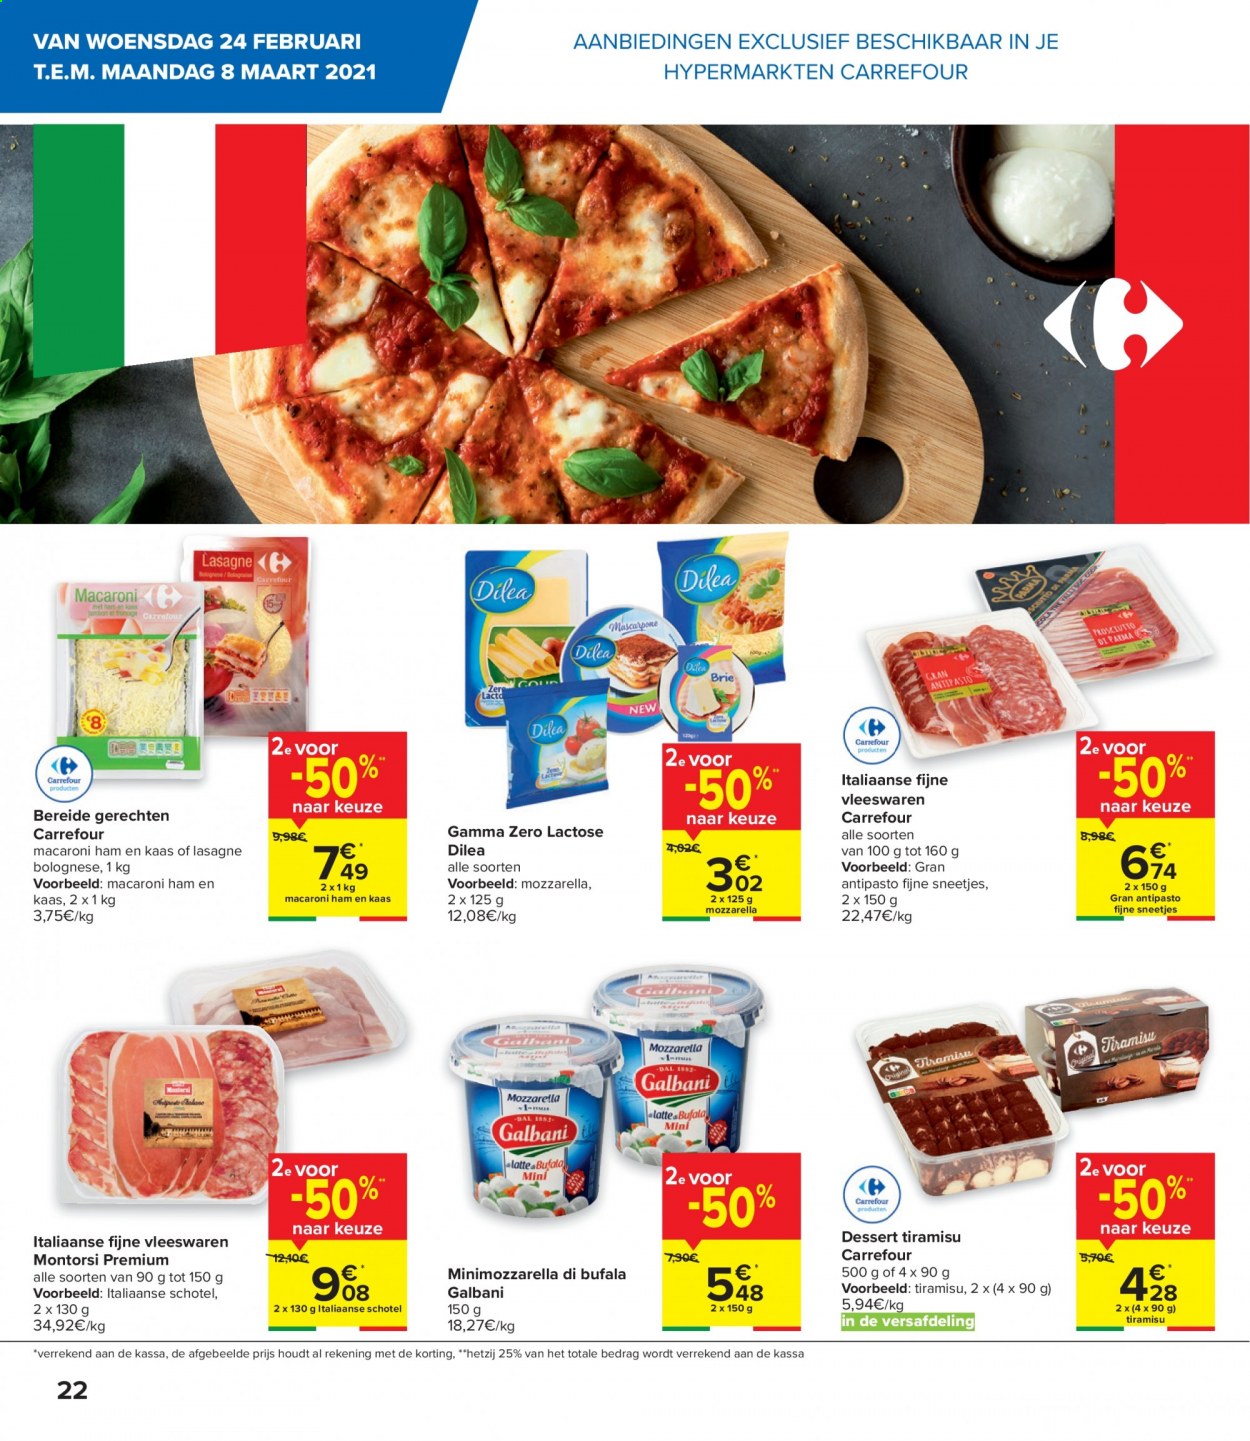 thumbnail - Carrefour hypermarkt-aanbieding - 24/02/2021 - 08/03/2021 -  producten in de aanbieding - ham, kaas, lasagne, macaroni, mozzarella, Gamma. Pagina 2.